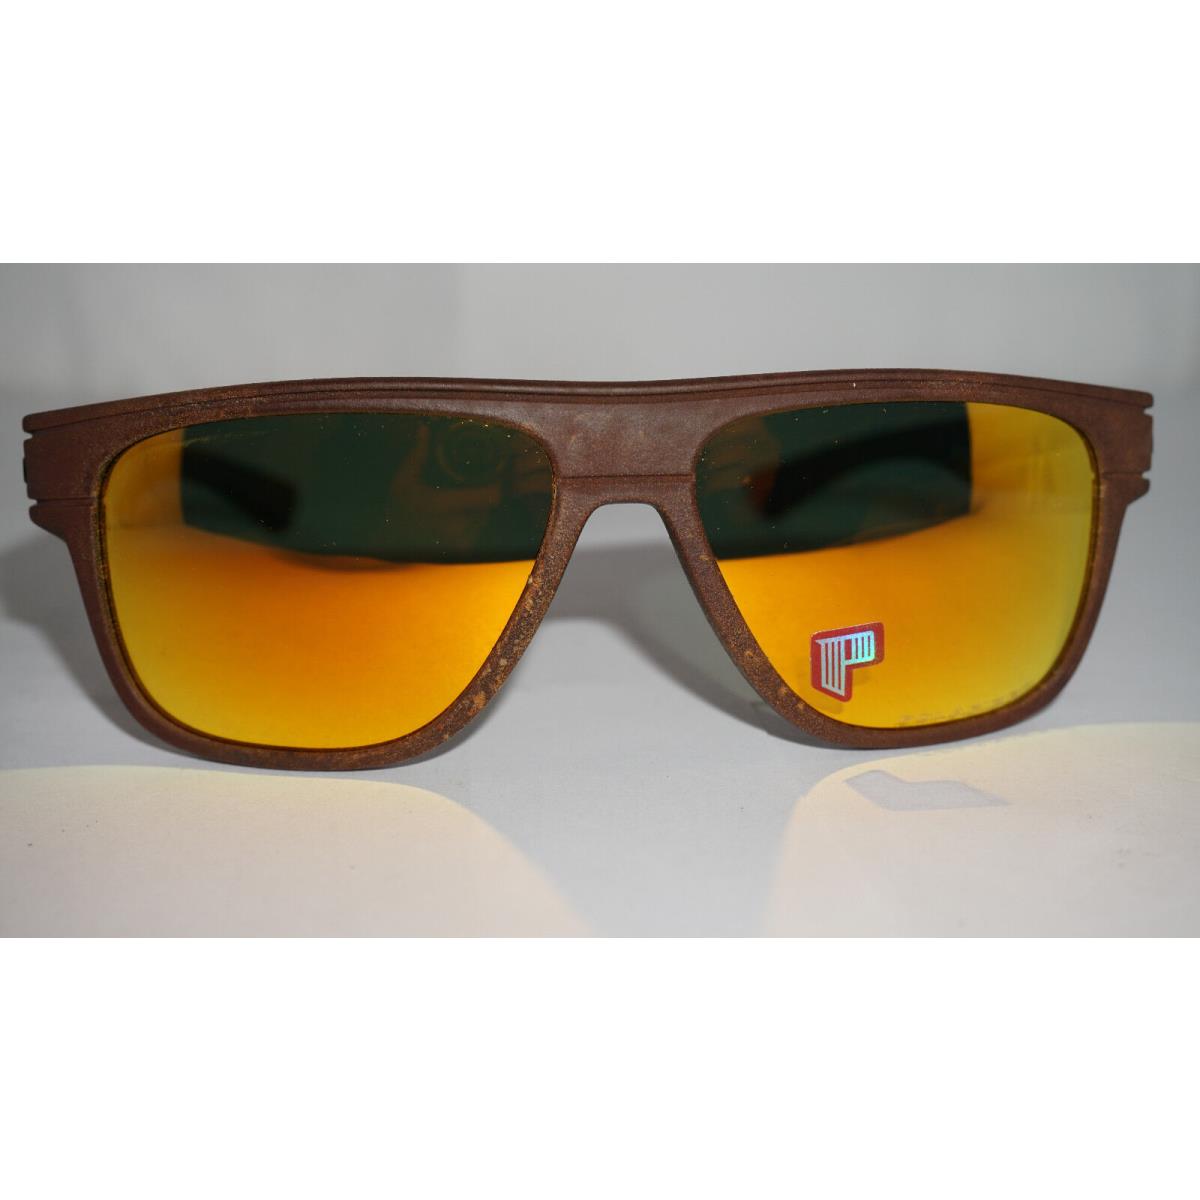 Oakley sunglasses  - Rust Decay Frame, Fire Iridium Polarized Lens 2